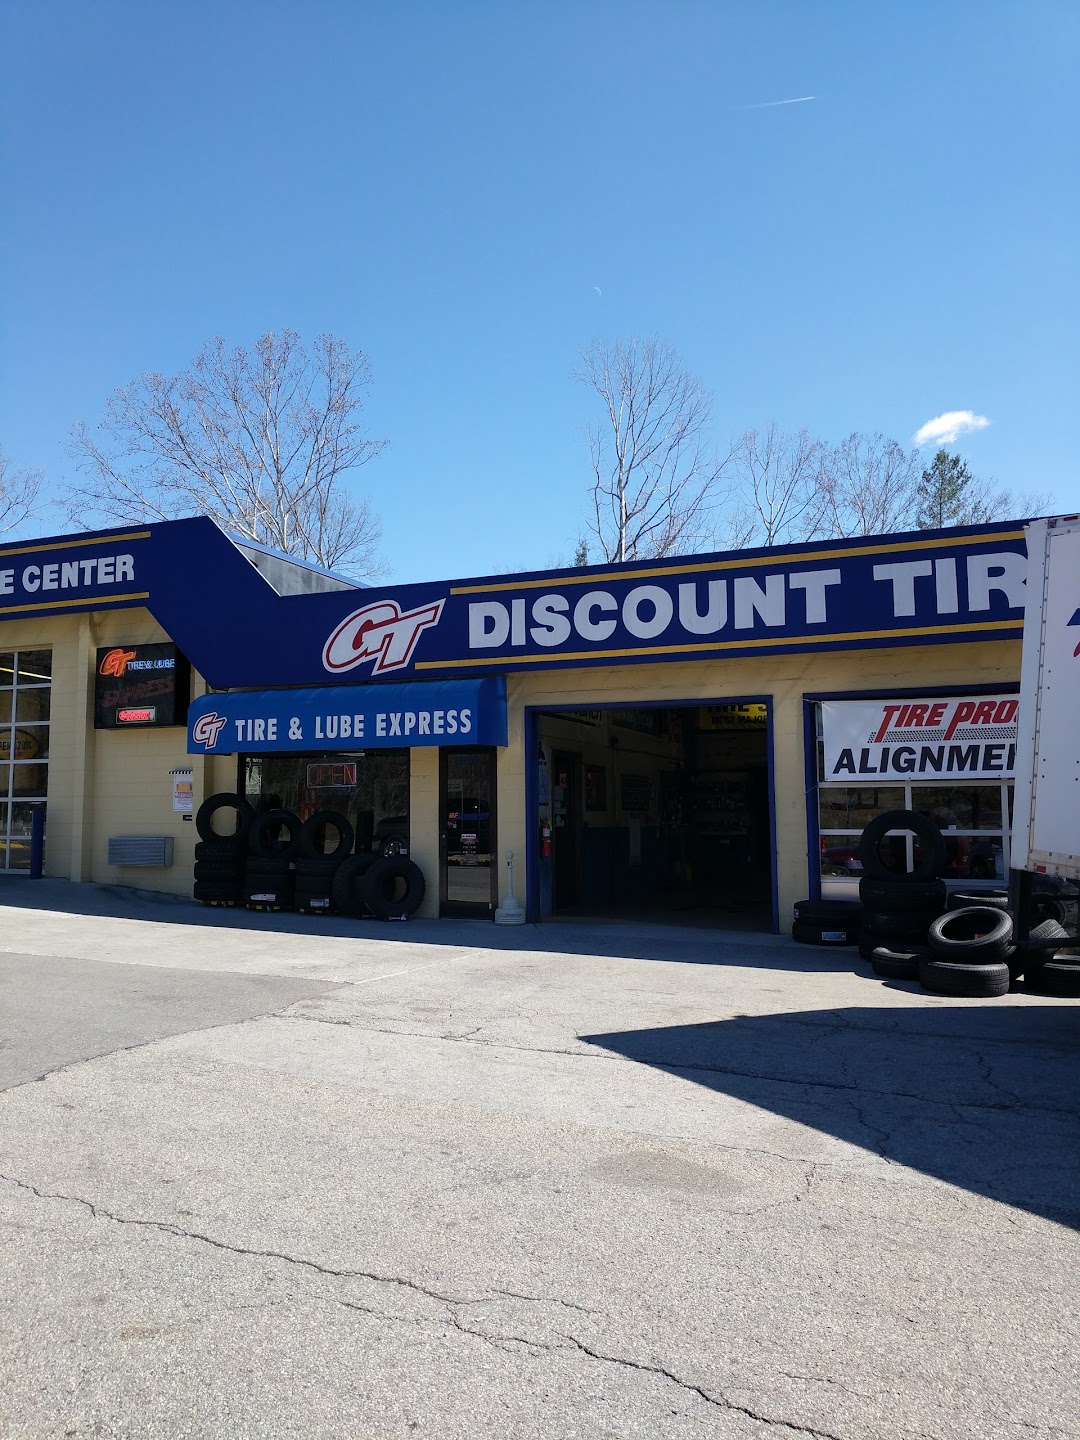 GT Discount Tire